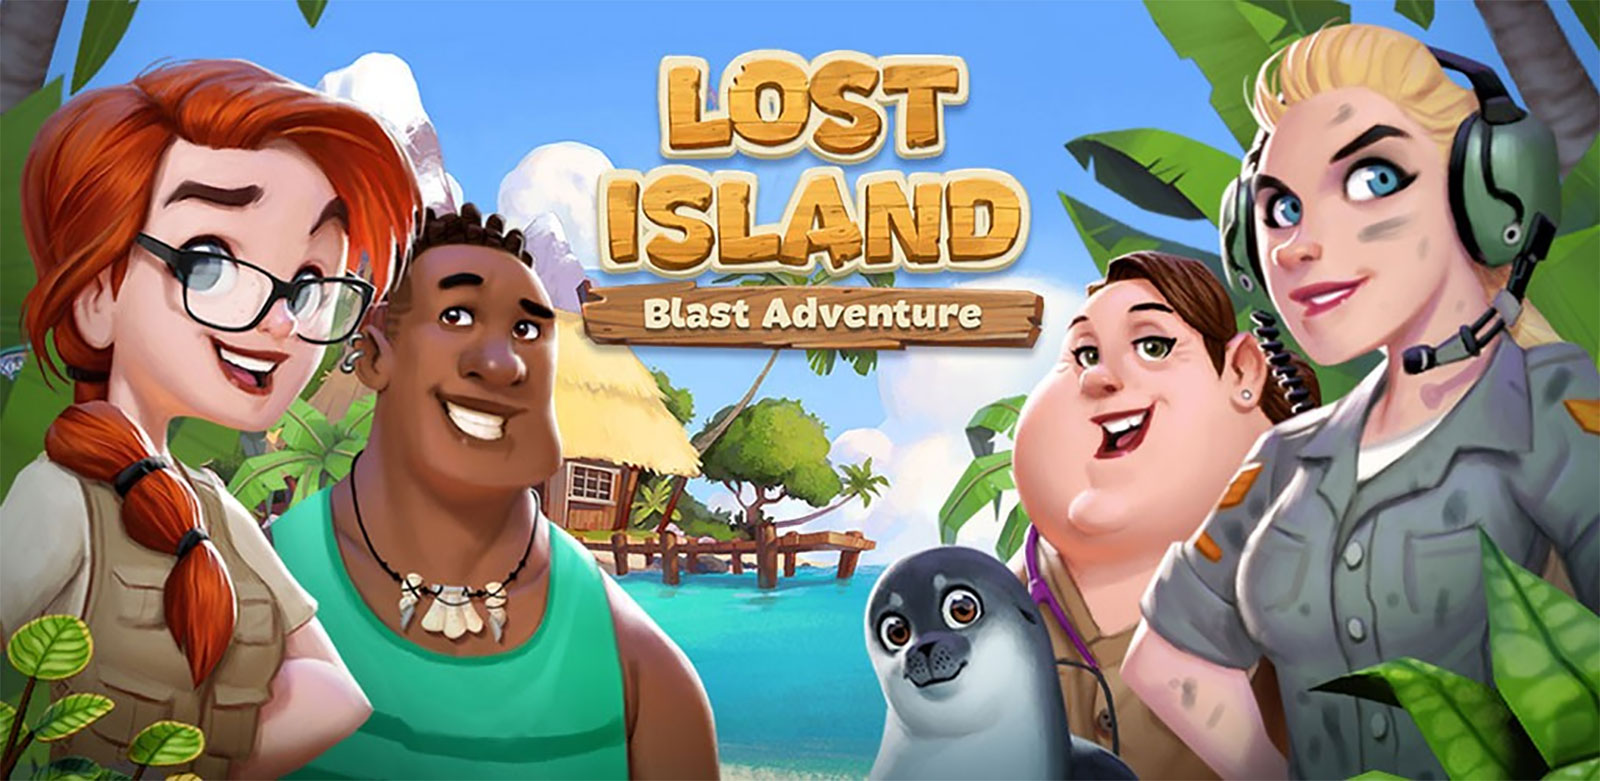 Lost island adventure